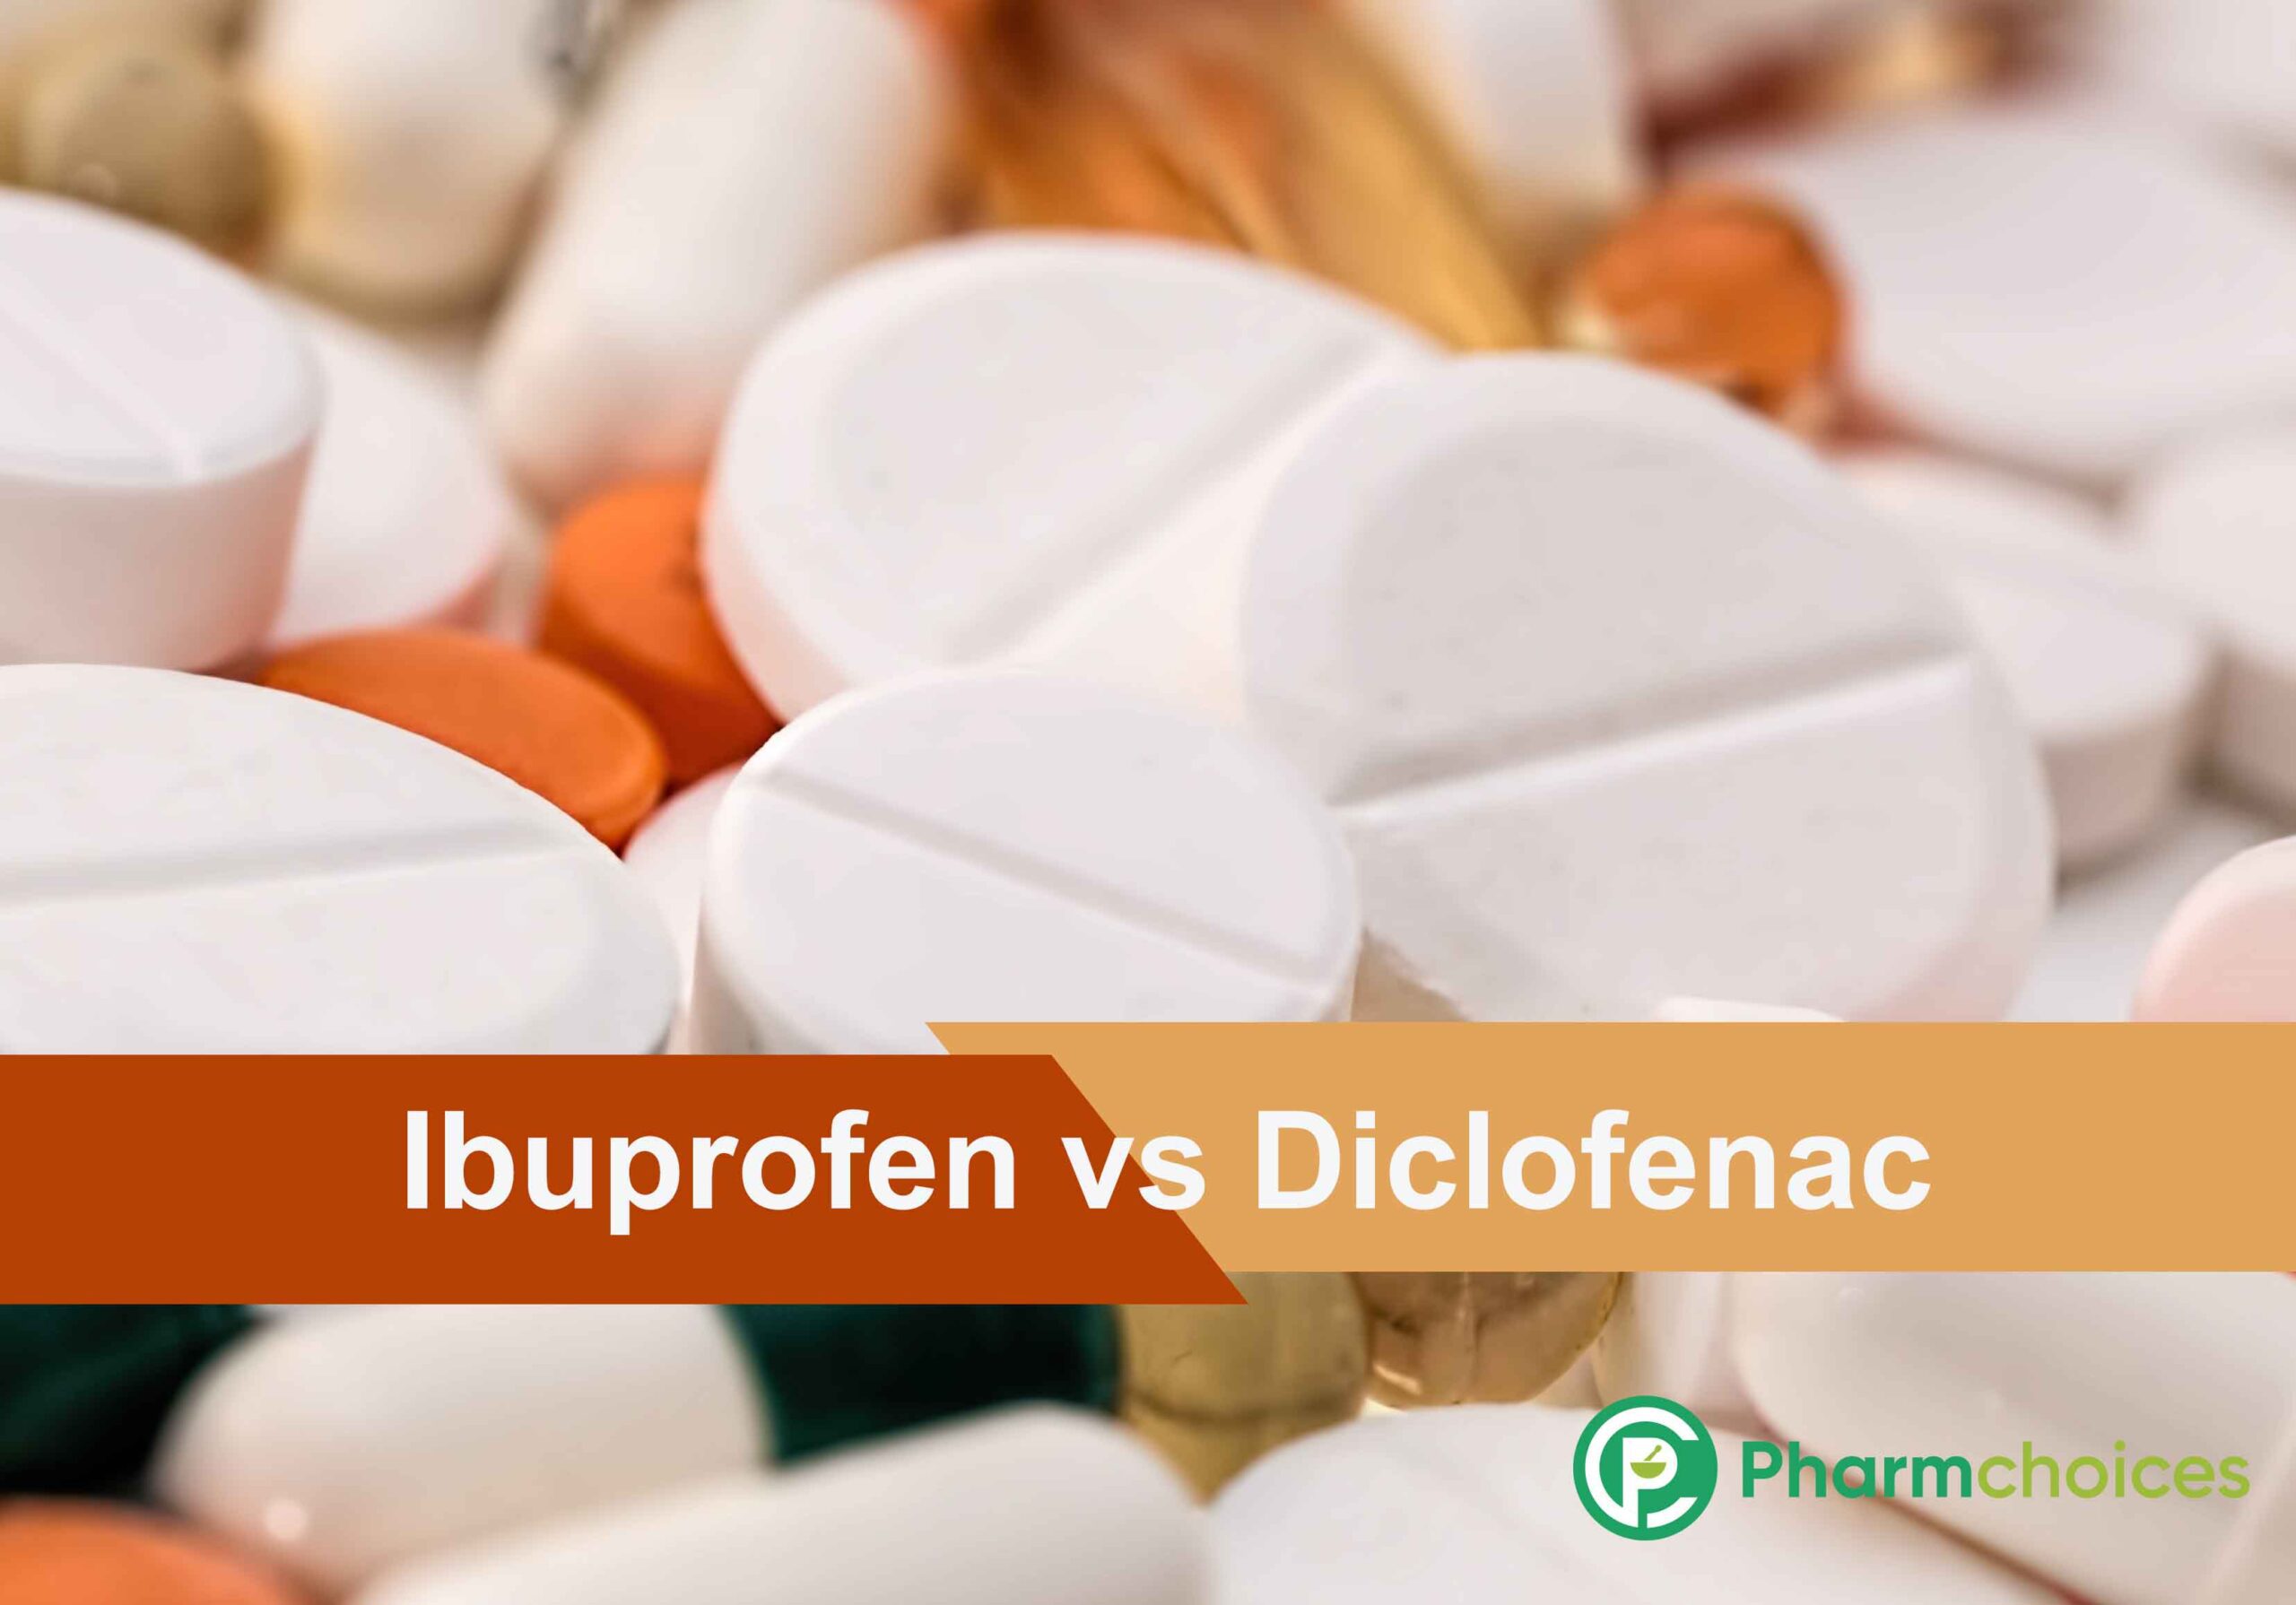 Diclofenac and Ibuprofen